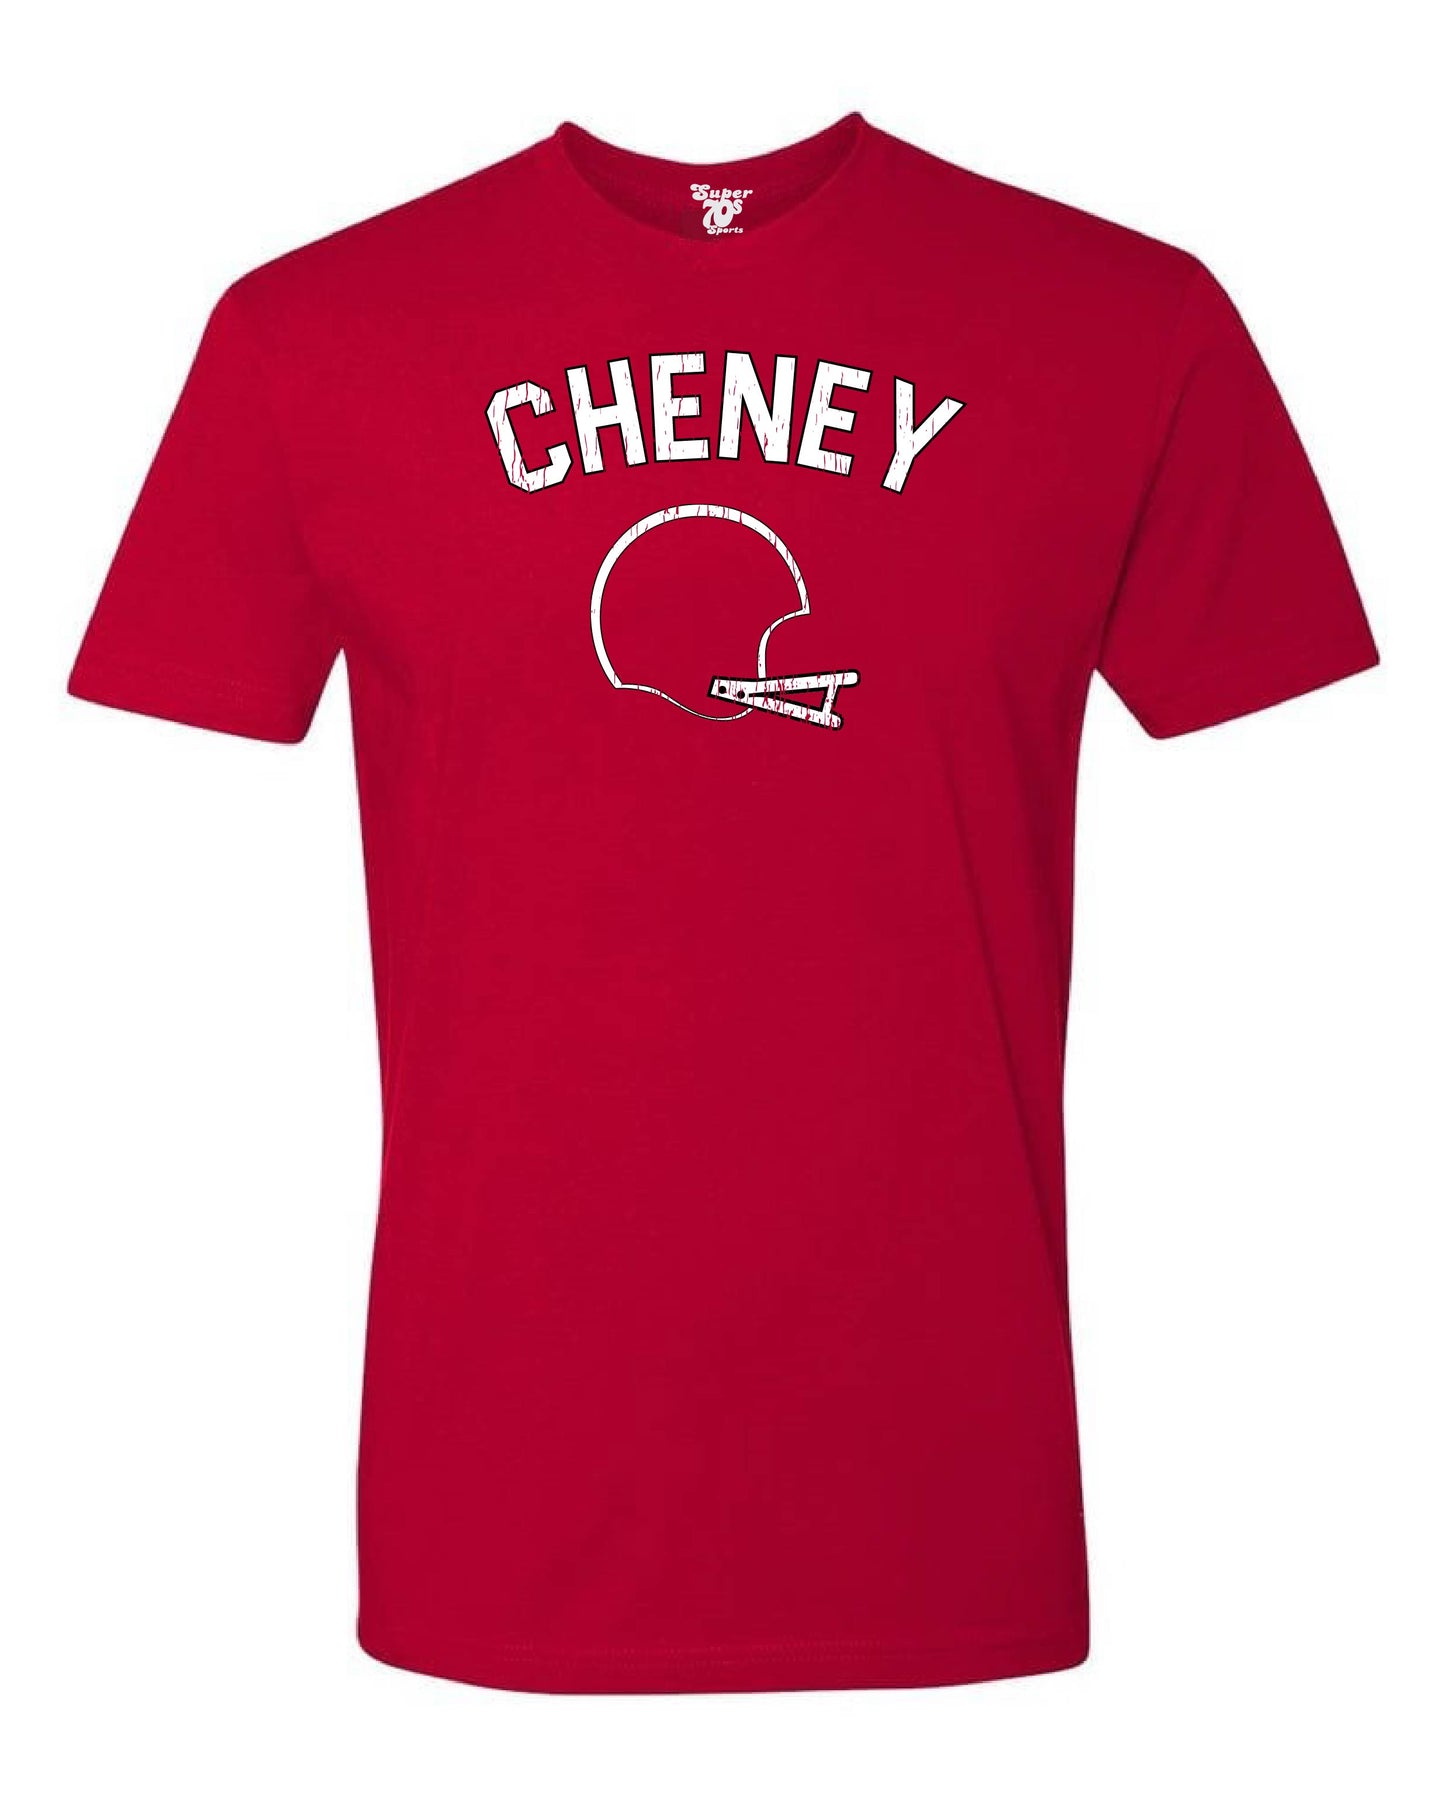 Cheney Football Tee